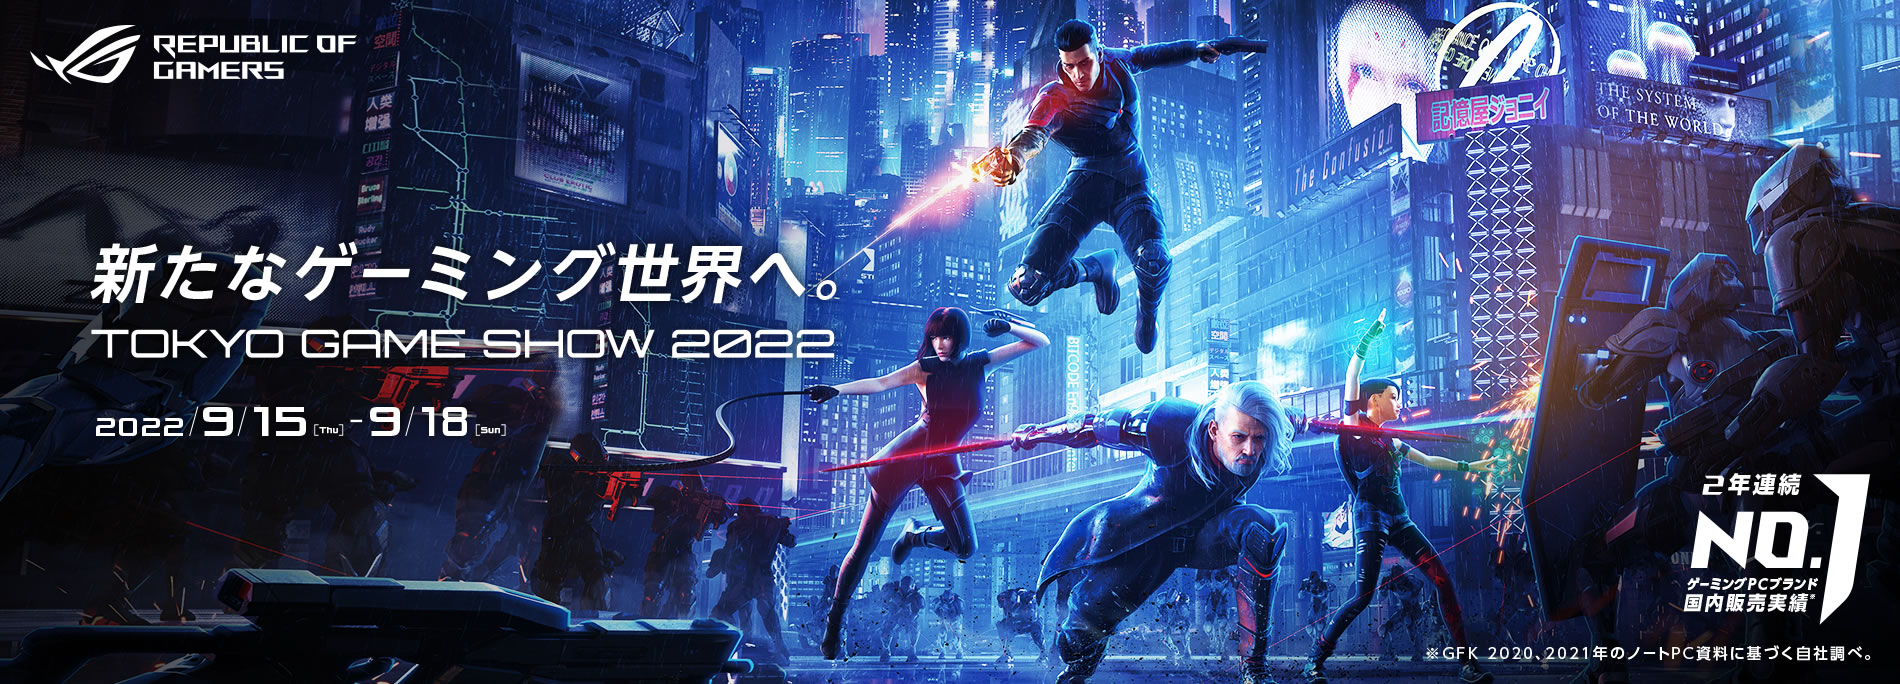 ROG x Tokyo Game Show 2022 新たなゲーミング世界へ。